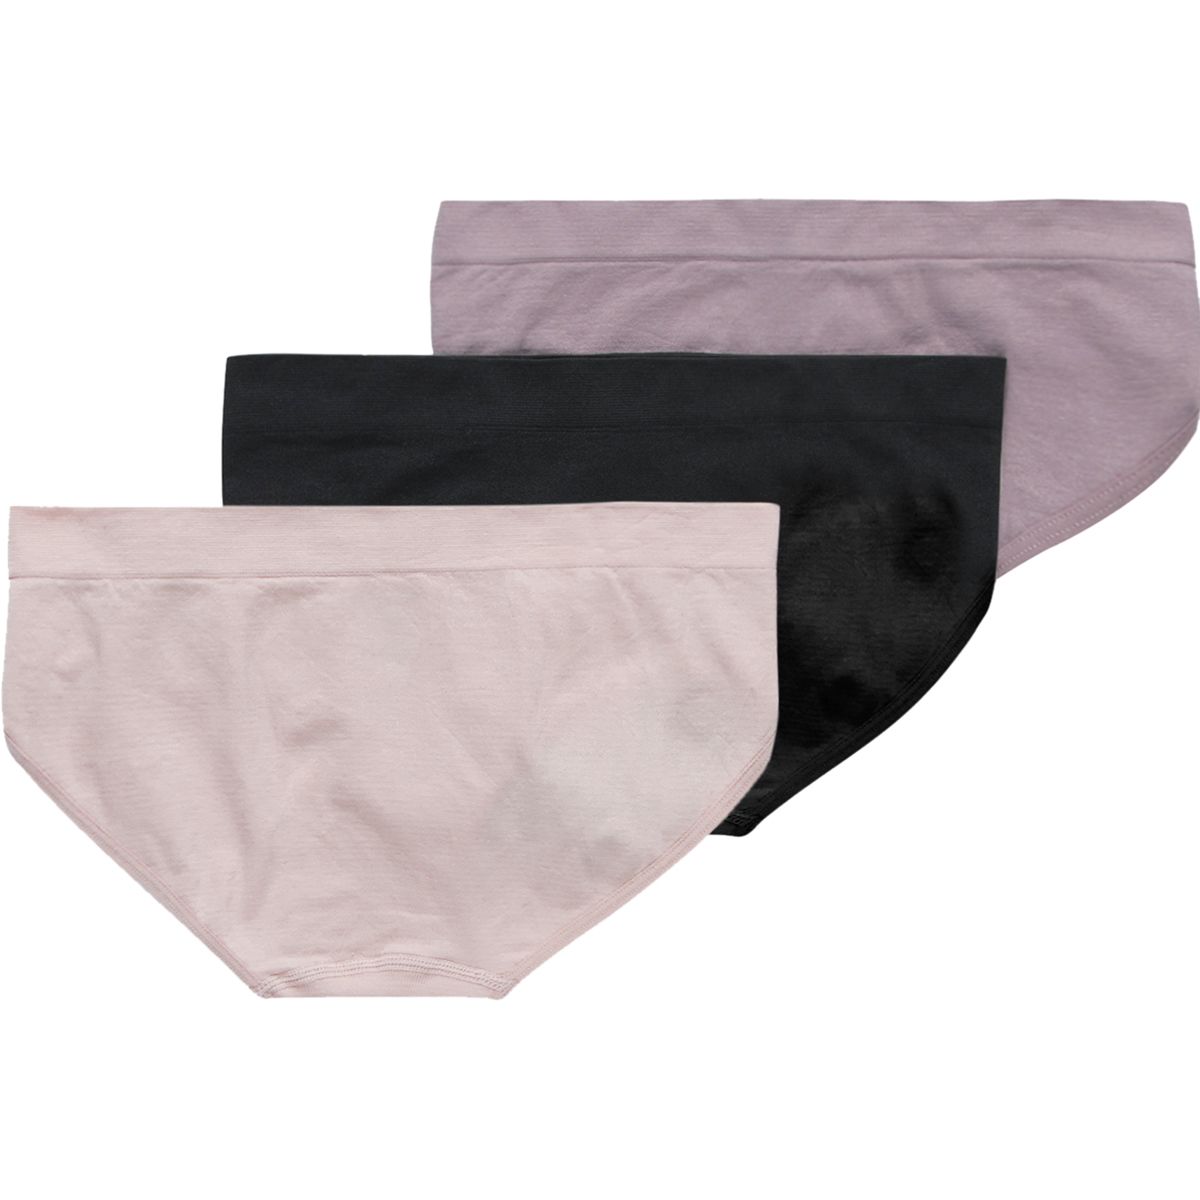 Layer 8 Women's Seamless Hipster Panties, 3-Pack